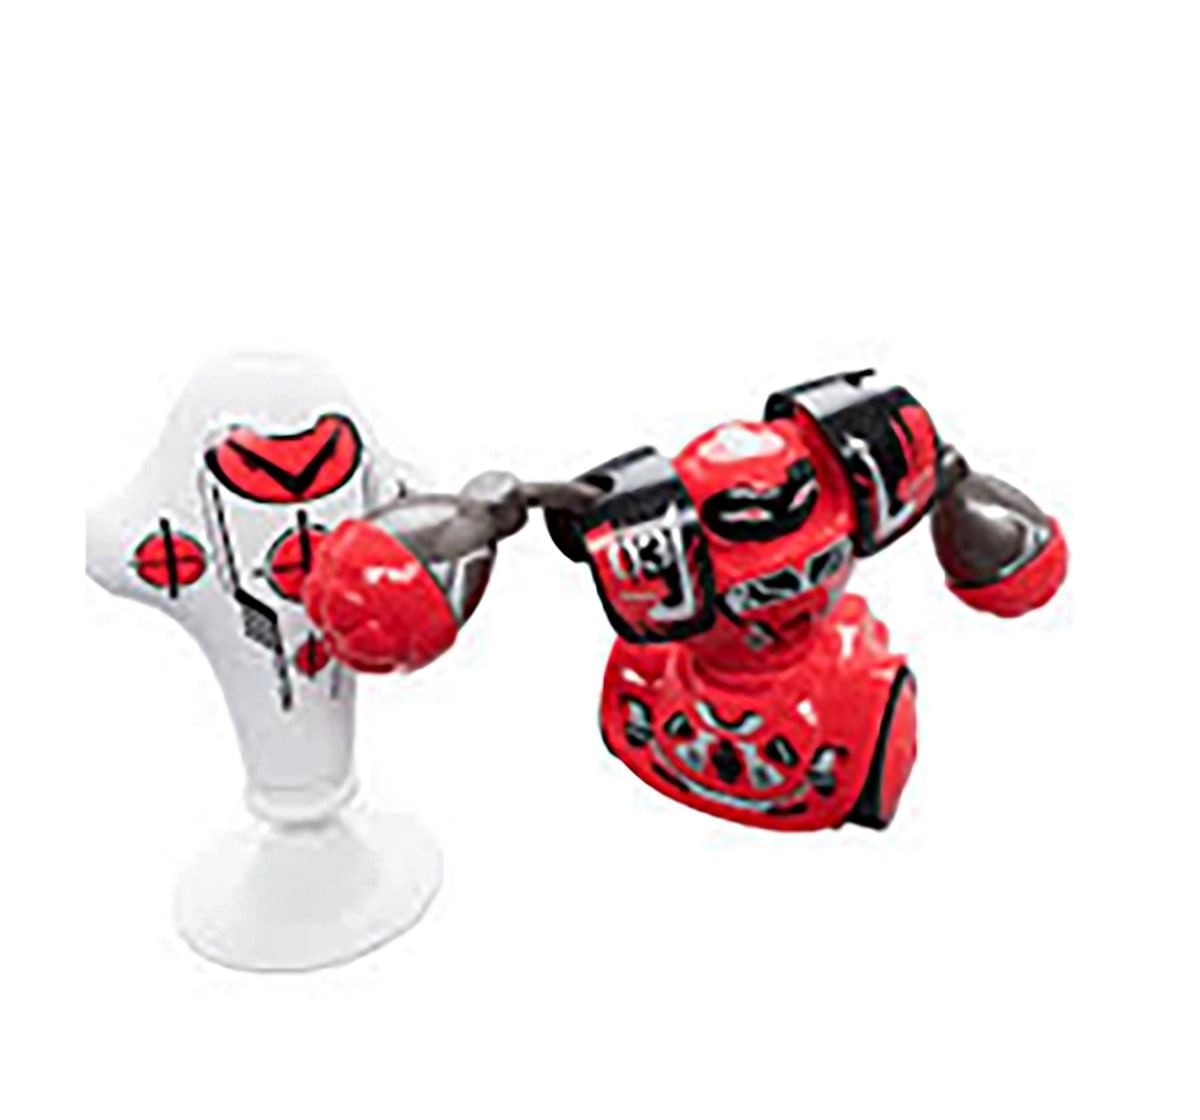 Silverlit Robo Kombat Robotics for Kids age 5Y+ 